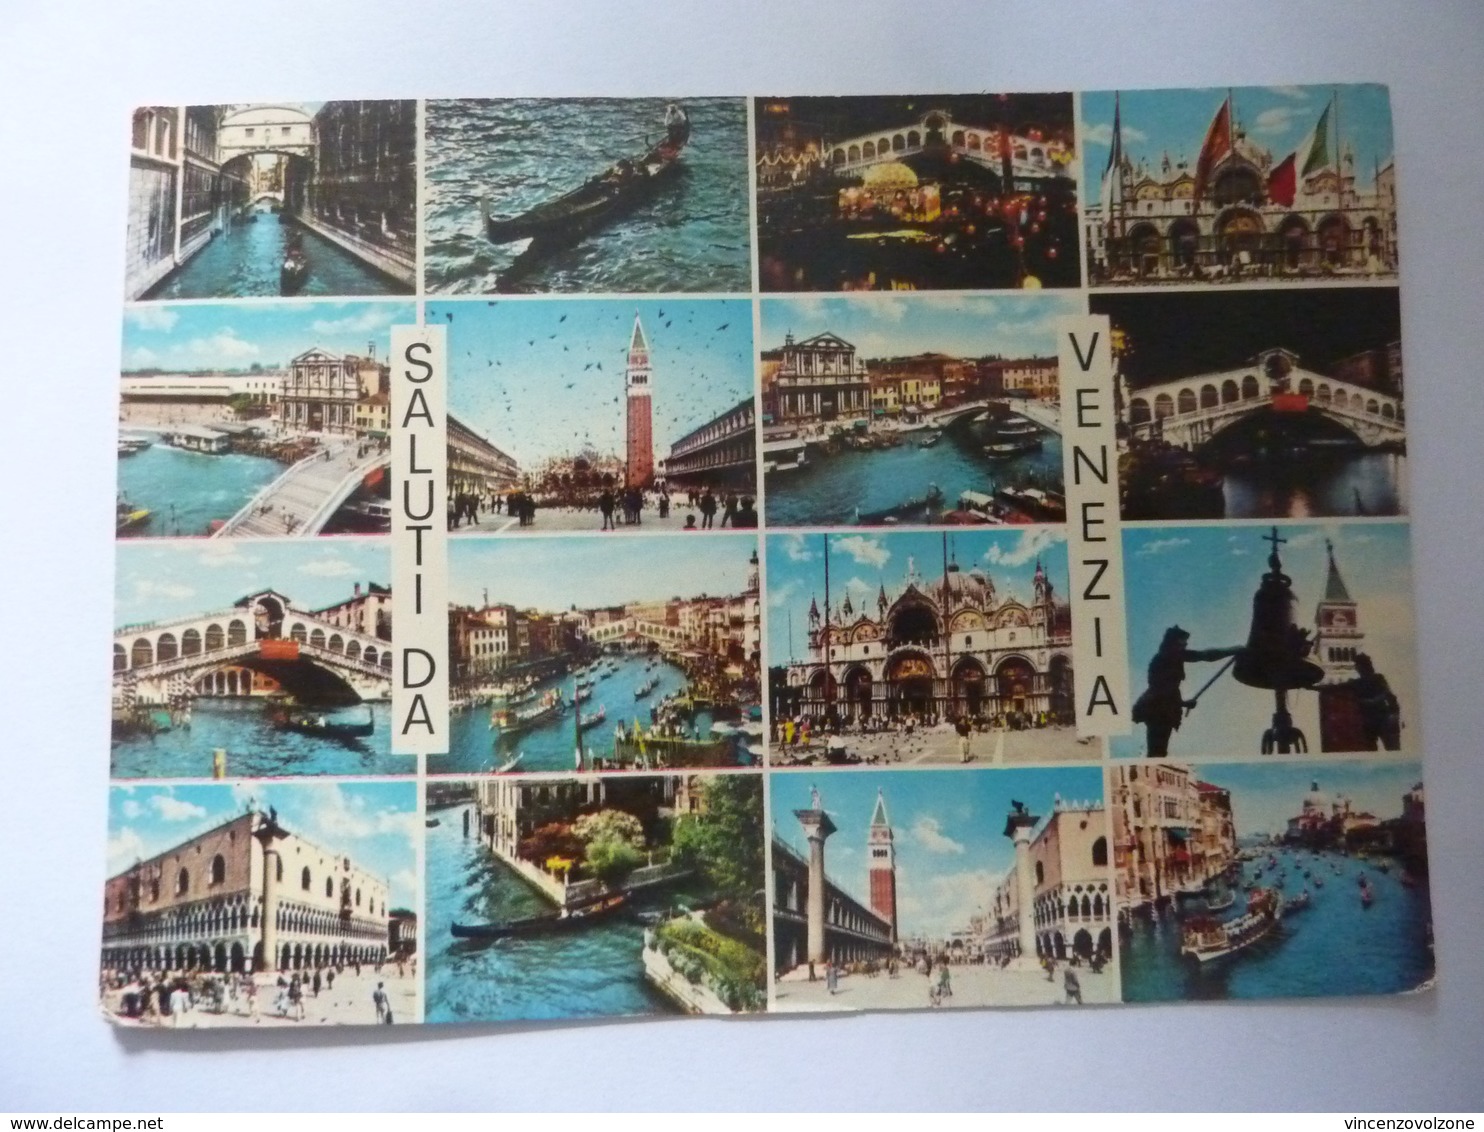 Cartolina Viaggiata "SALUTI DA VENEZIA" 1981 - Venezia